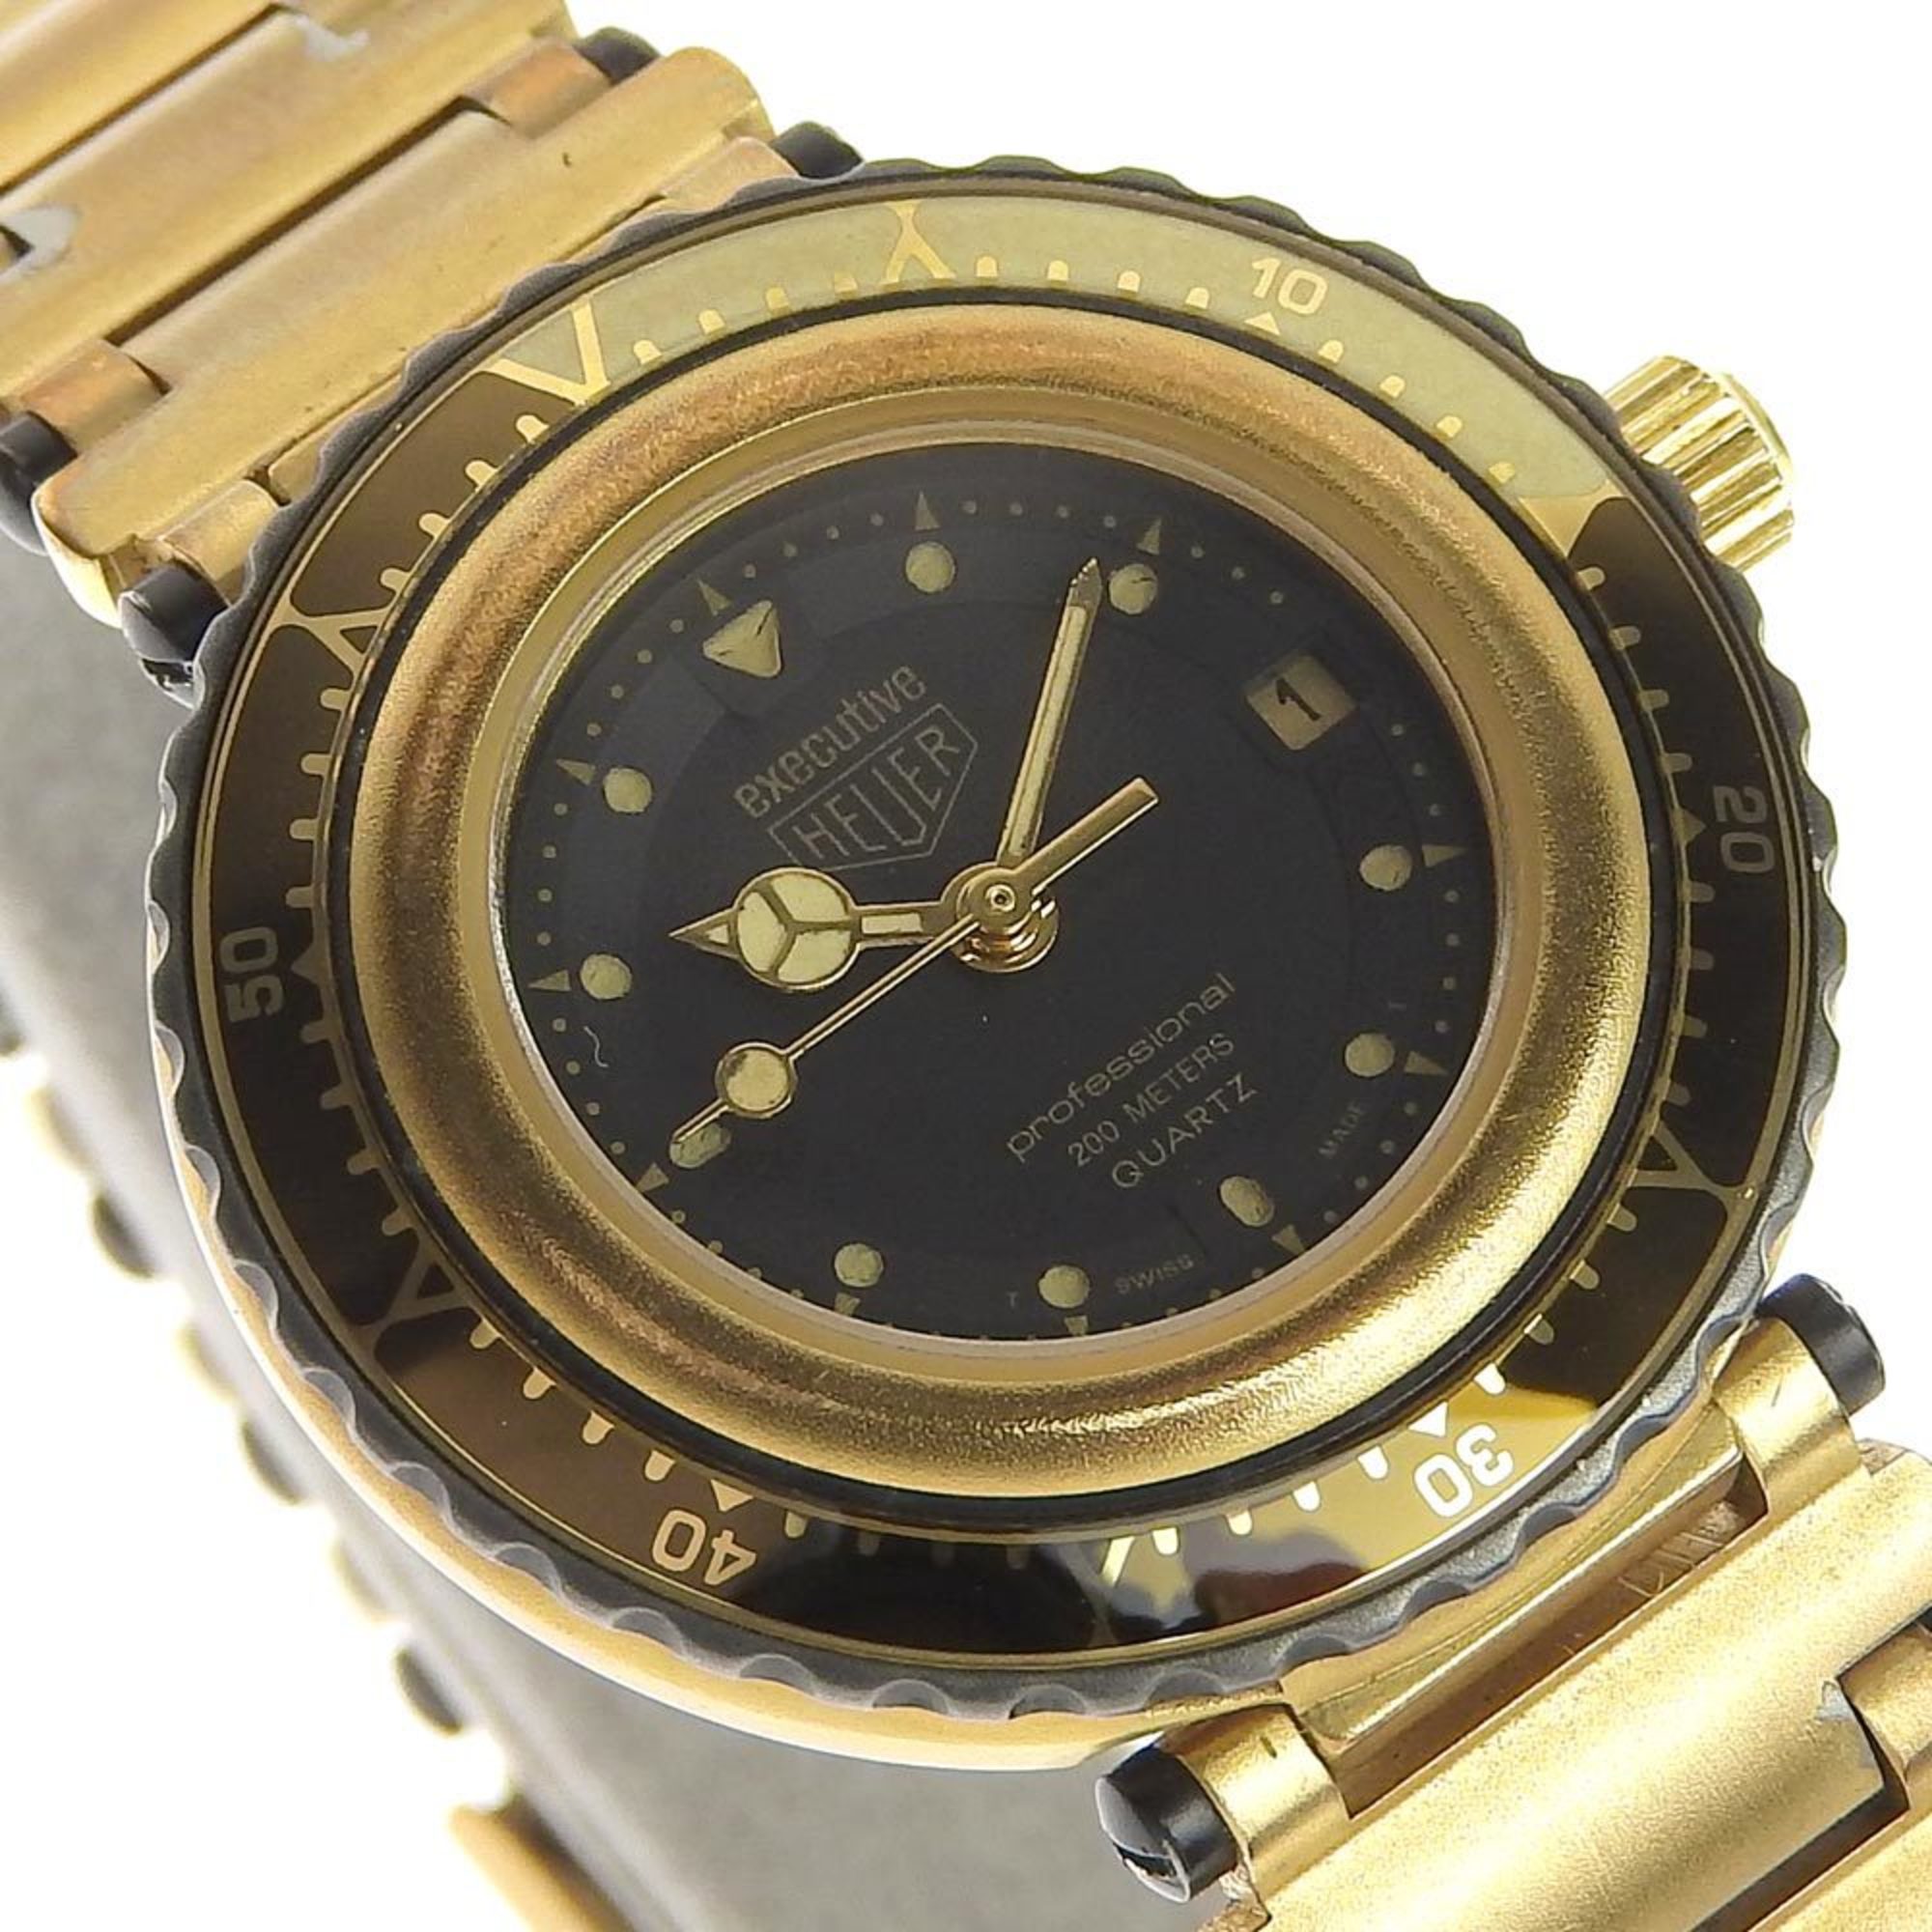 Tag Heuer TAG HEUER executive lady's quartz wristwatch 914 308 antique